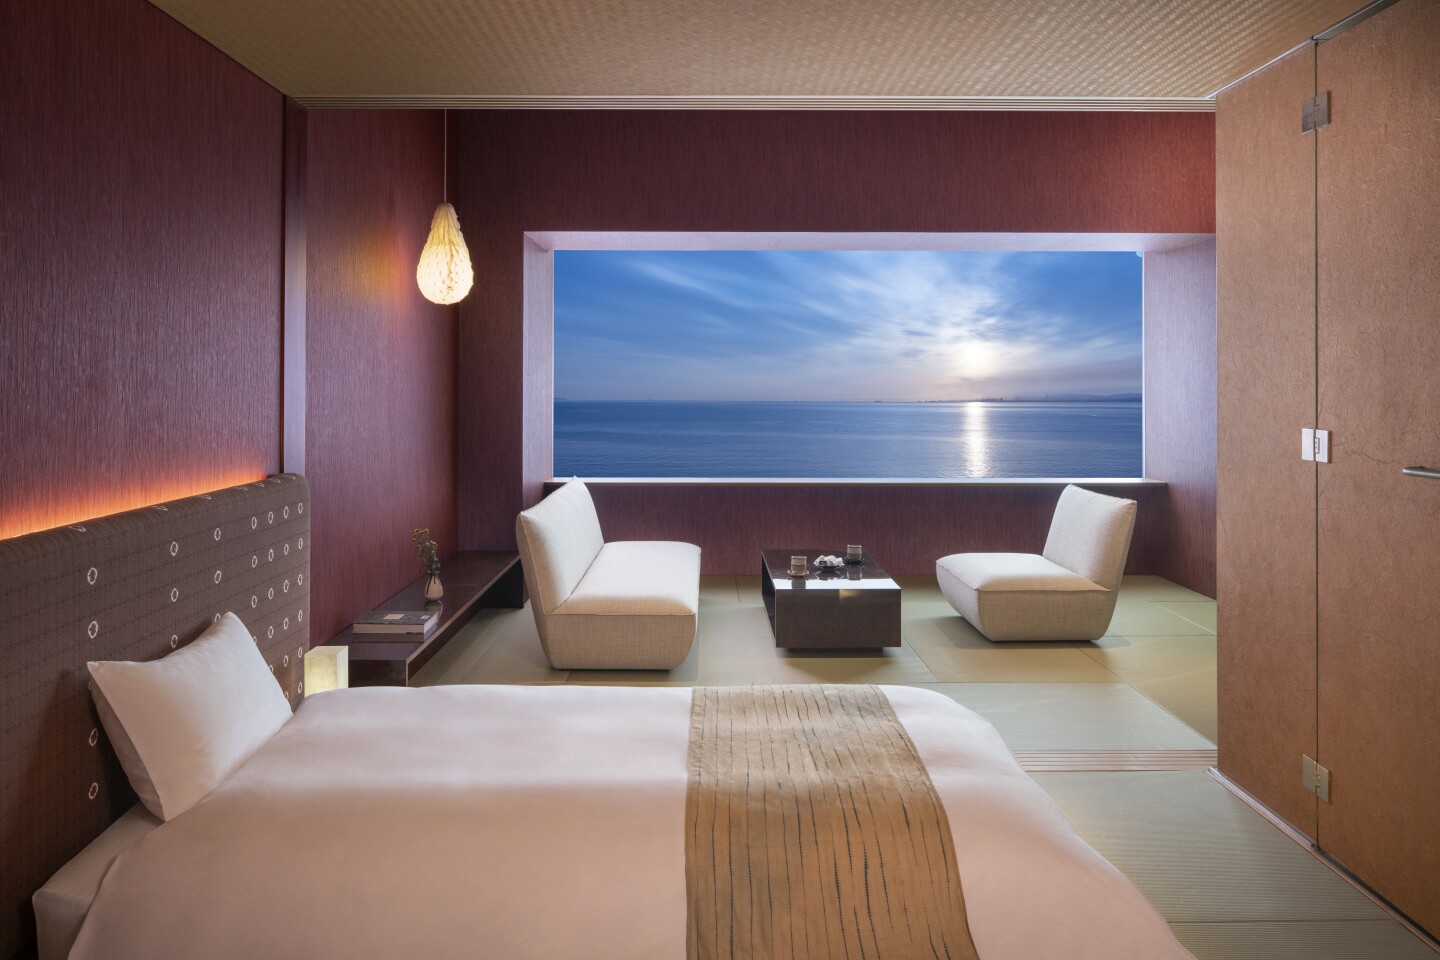 The rooms at Kai Beppu have ocean views. 星野集團於2021年開幕的「界 別府」（Kai Beppu）是位於九州島別府市的70間客房的海濱度假勝地